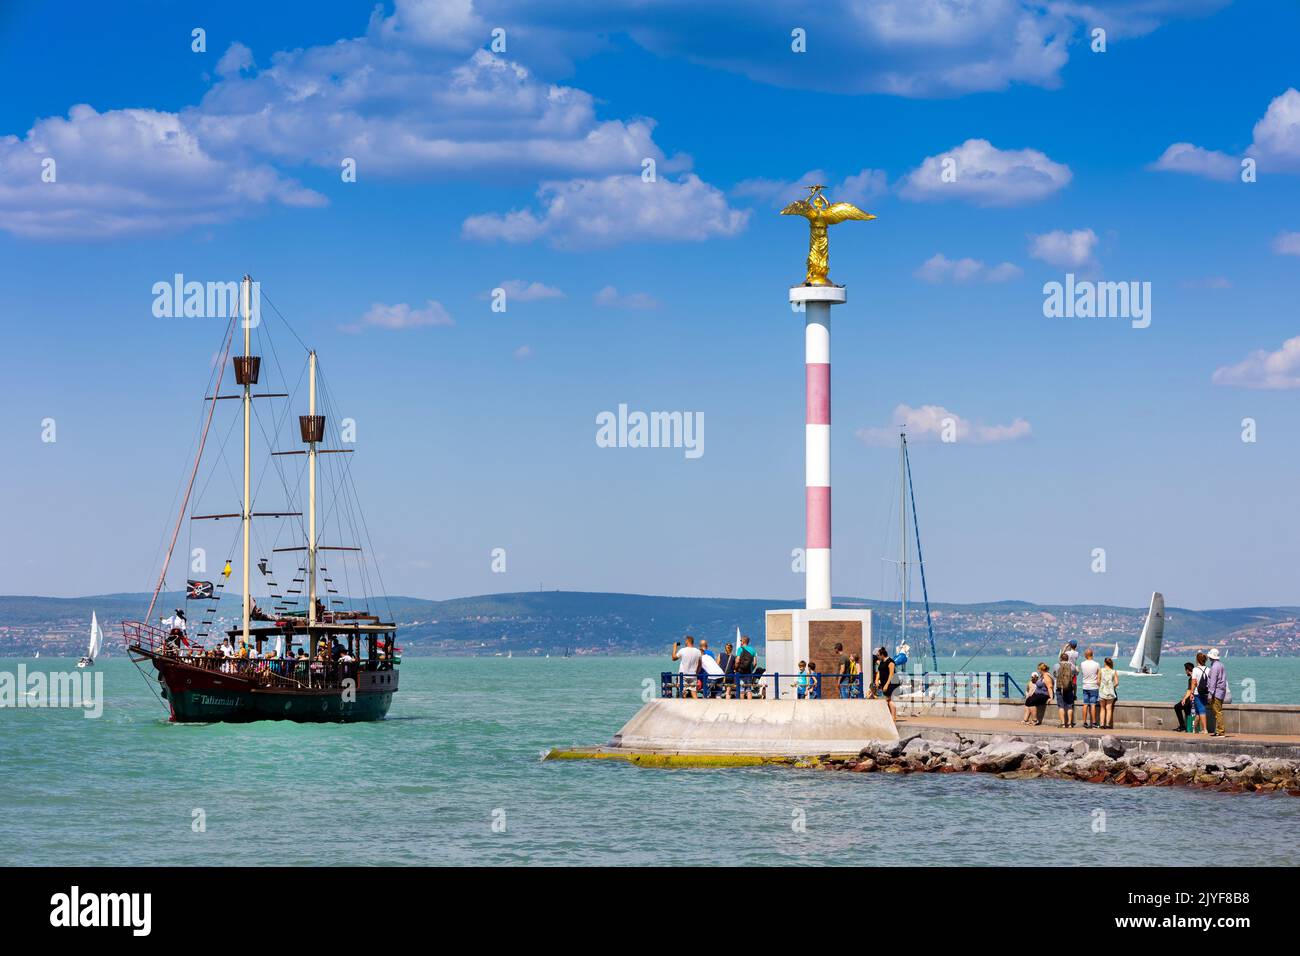 přístav, Siofok - rekreační oblast, Jezero Balaton, Maďarsko / harbour, Siofok town recreation area, Balaton lake, Hungary, Europe Stock Photo